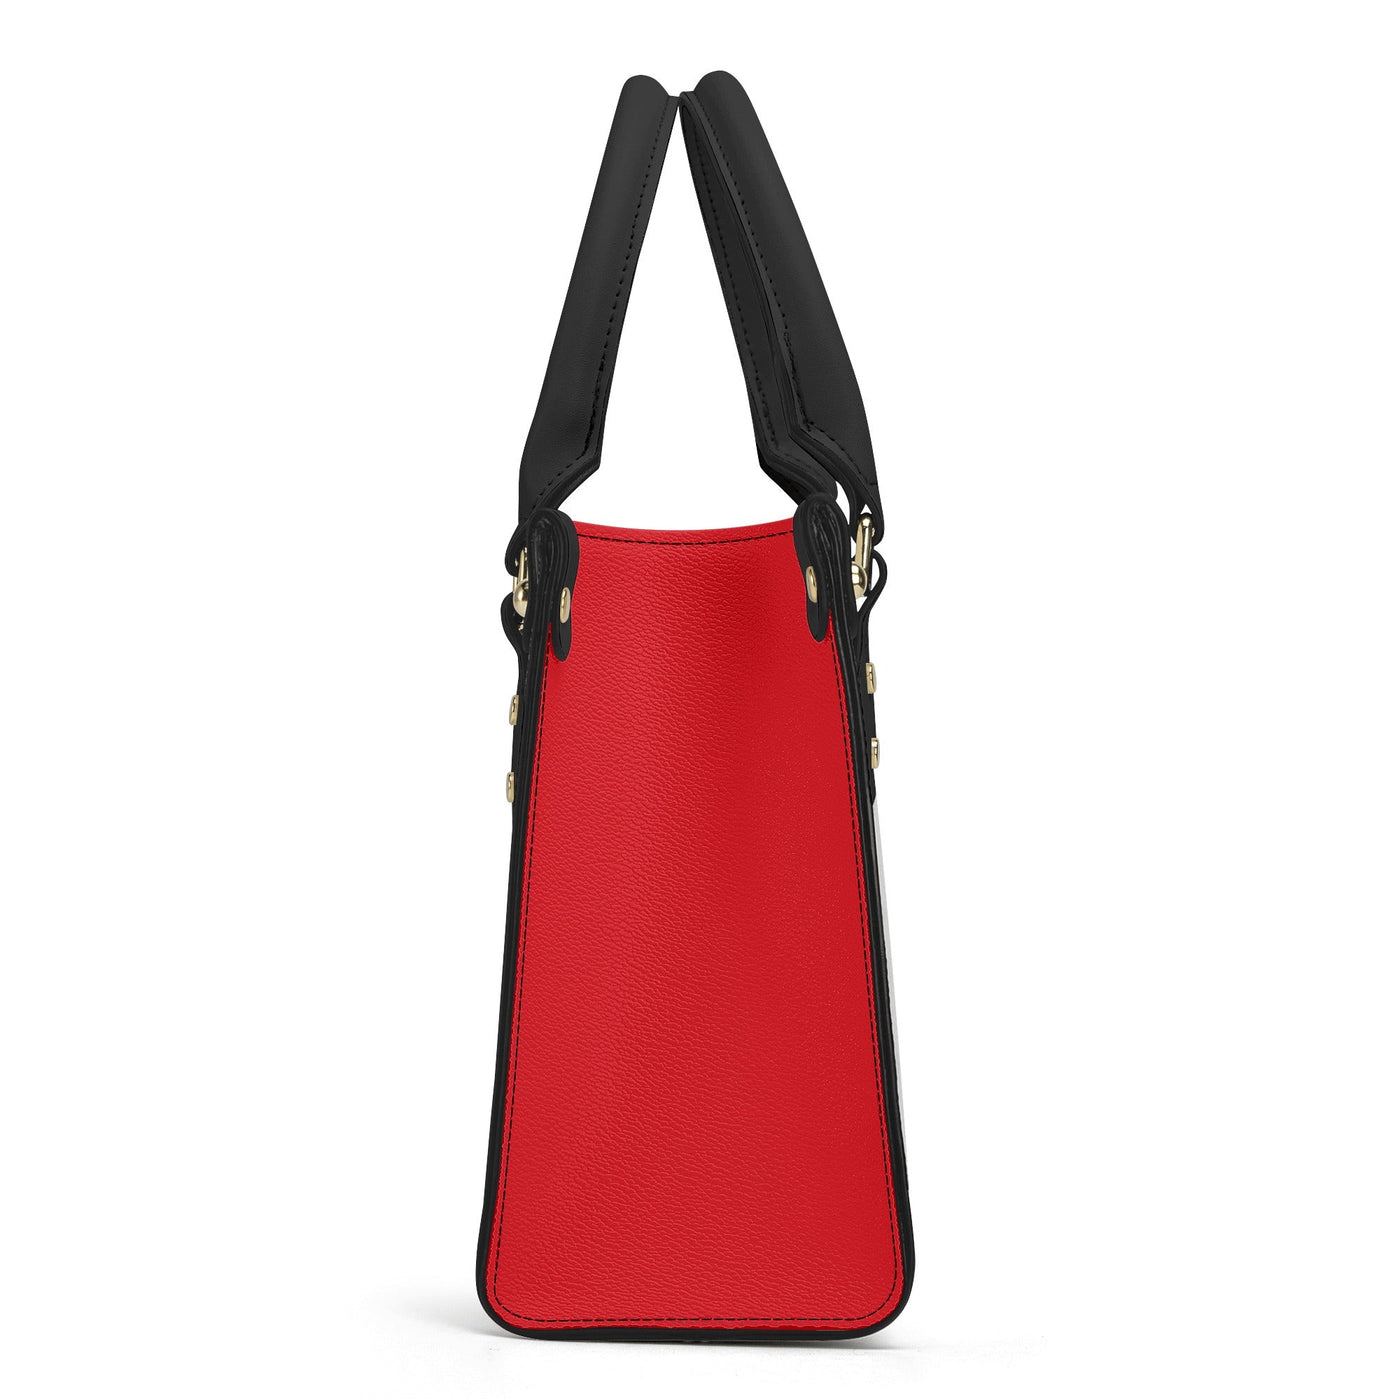 Classic Red Bandana Pattern Luxury Tote Handbag